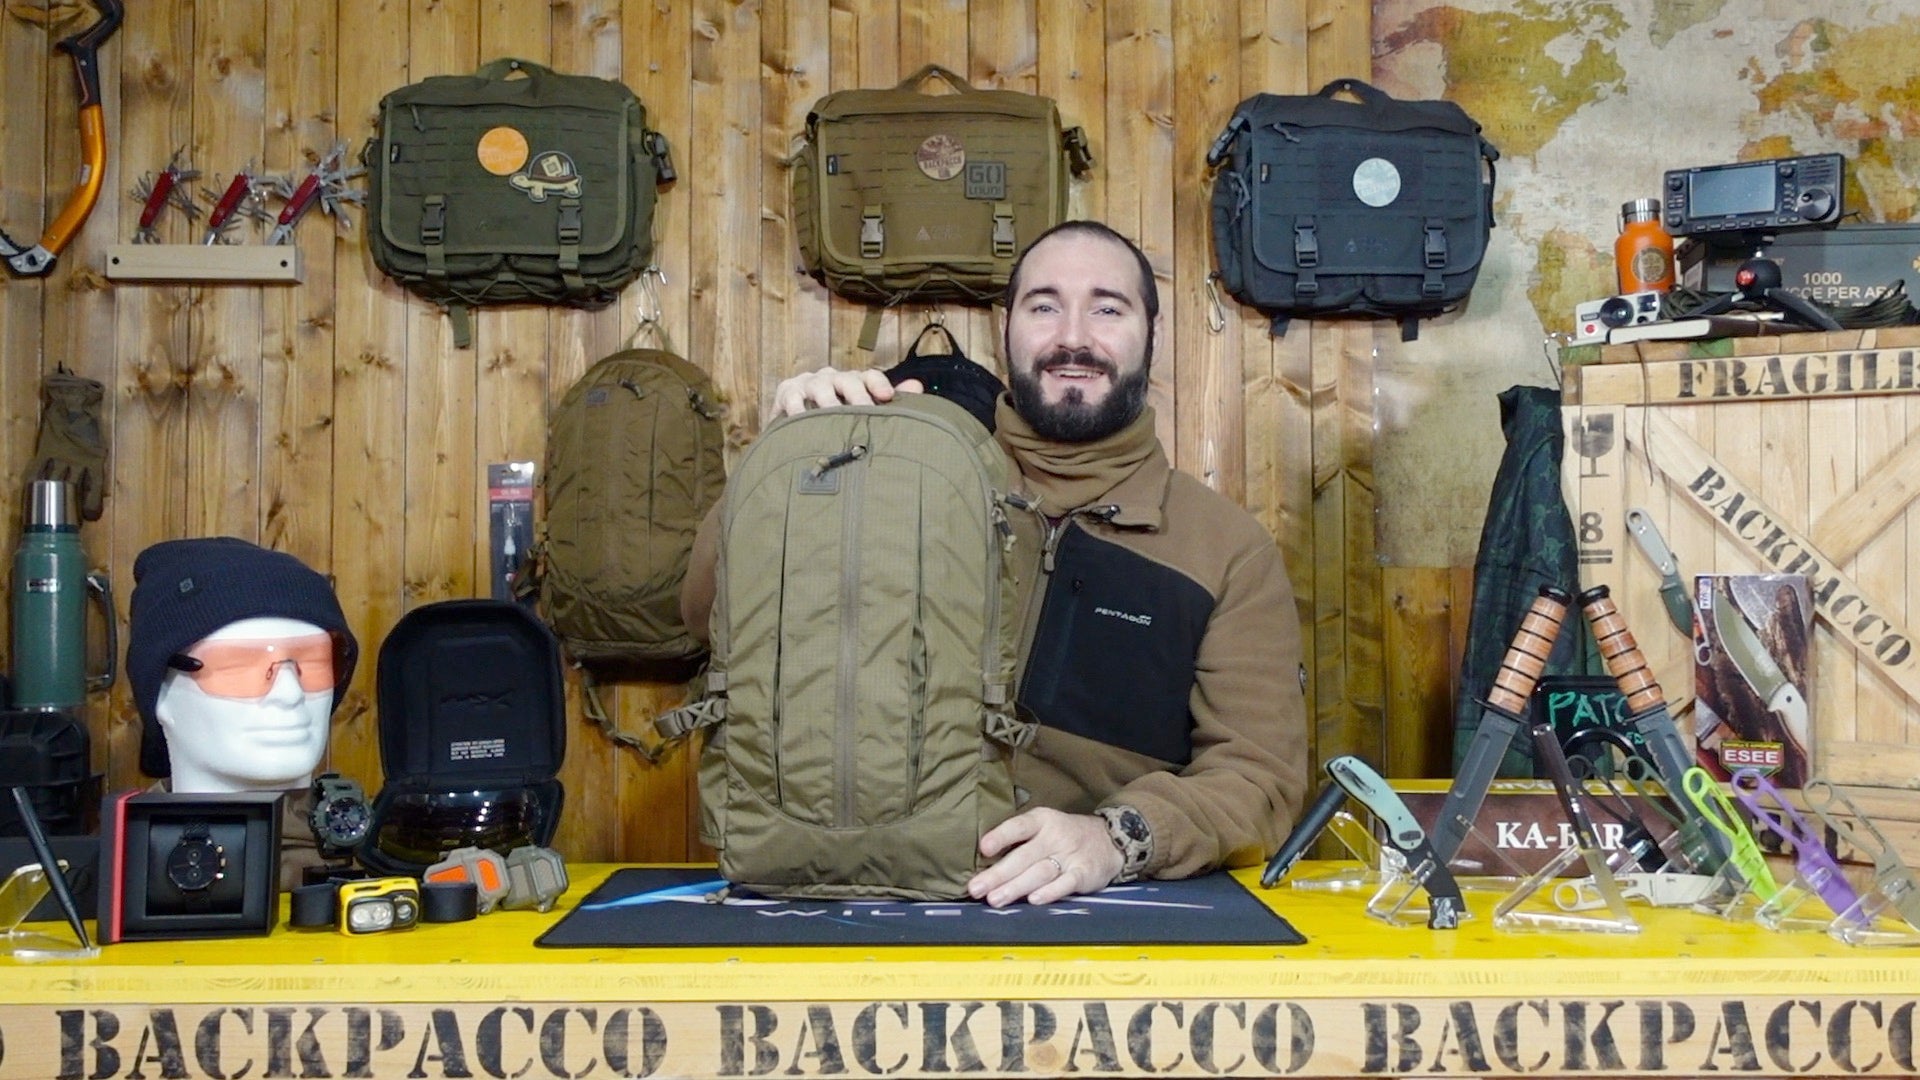 PAOLO DI BACKPACCO SPIEGA L'Helikon Tex Groundhog backpack